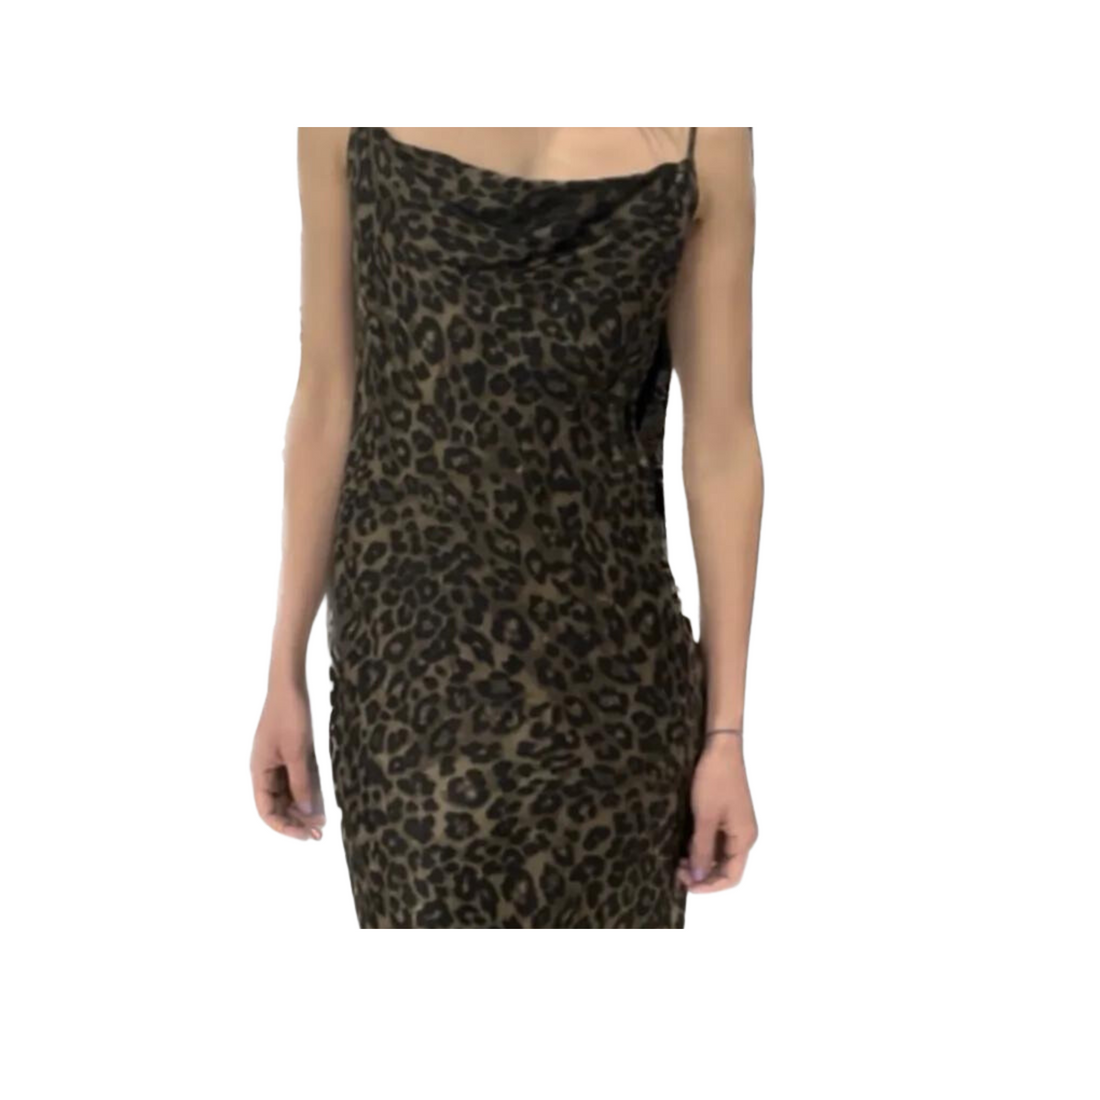 Zara Leopard Slip Dress